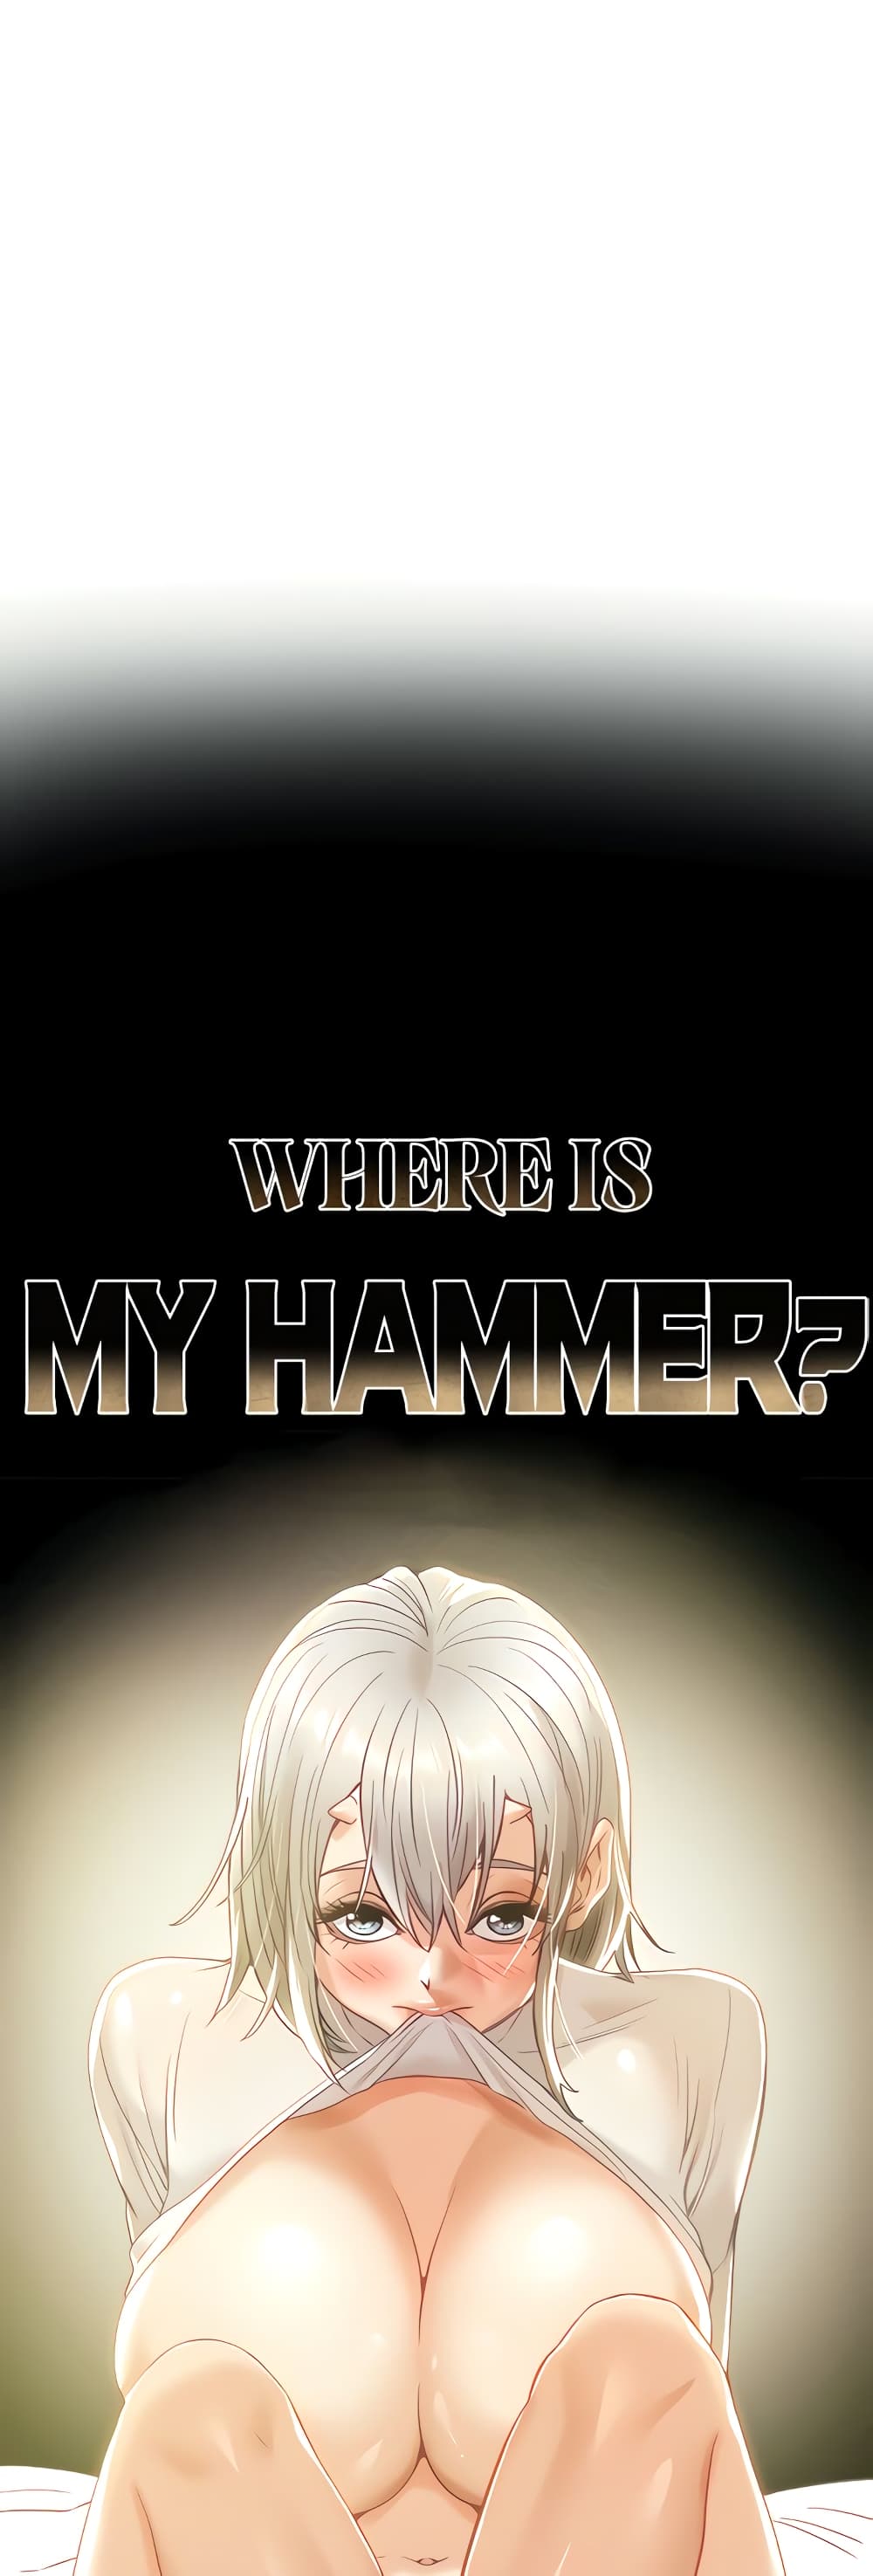 Where Did My Hammer Go ตอนที่ 40 ภาพ 0